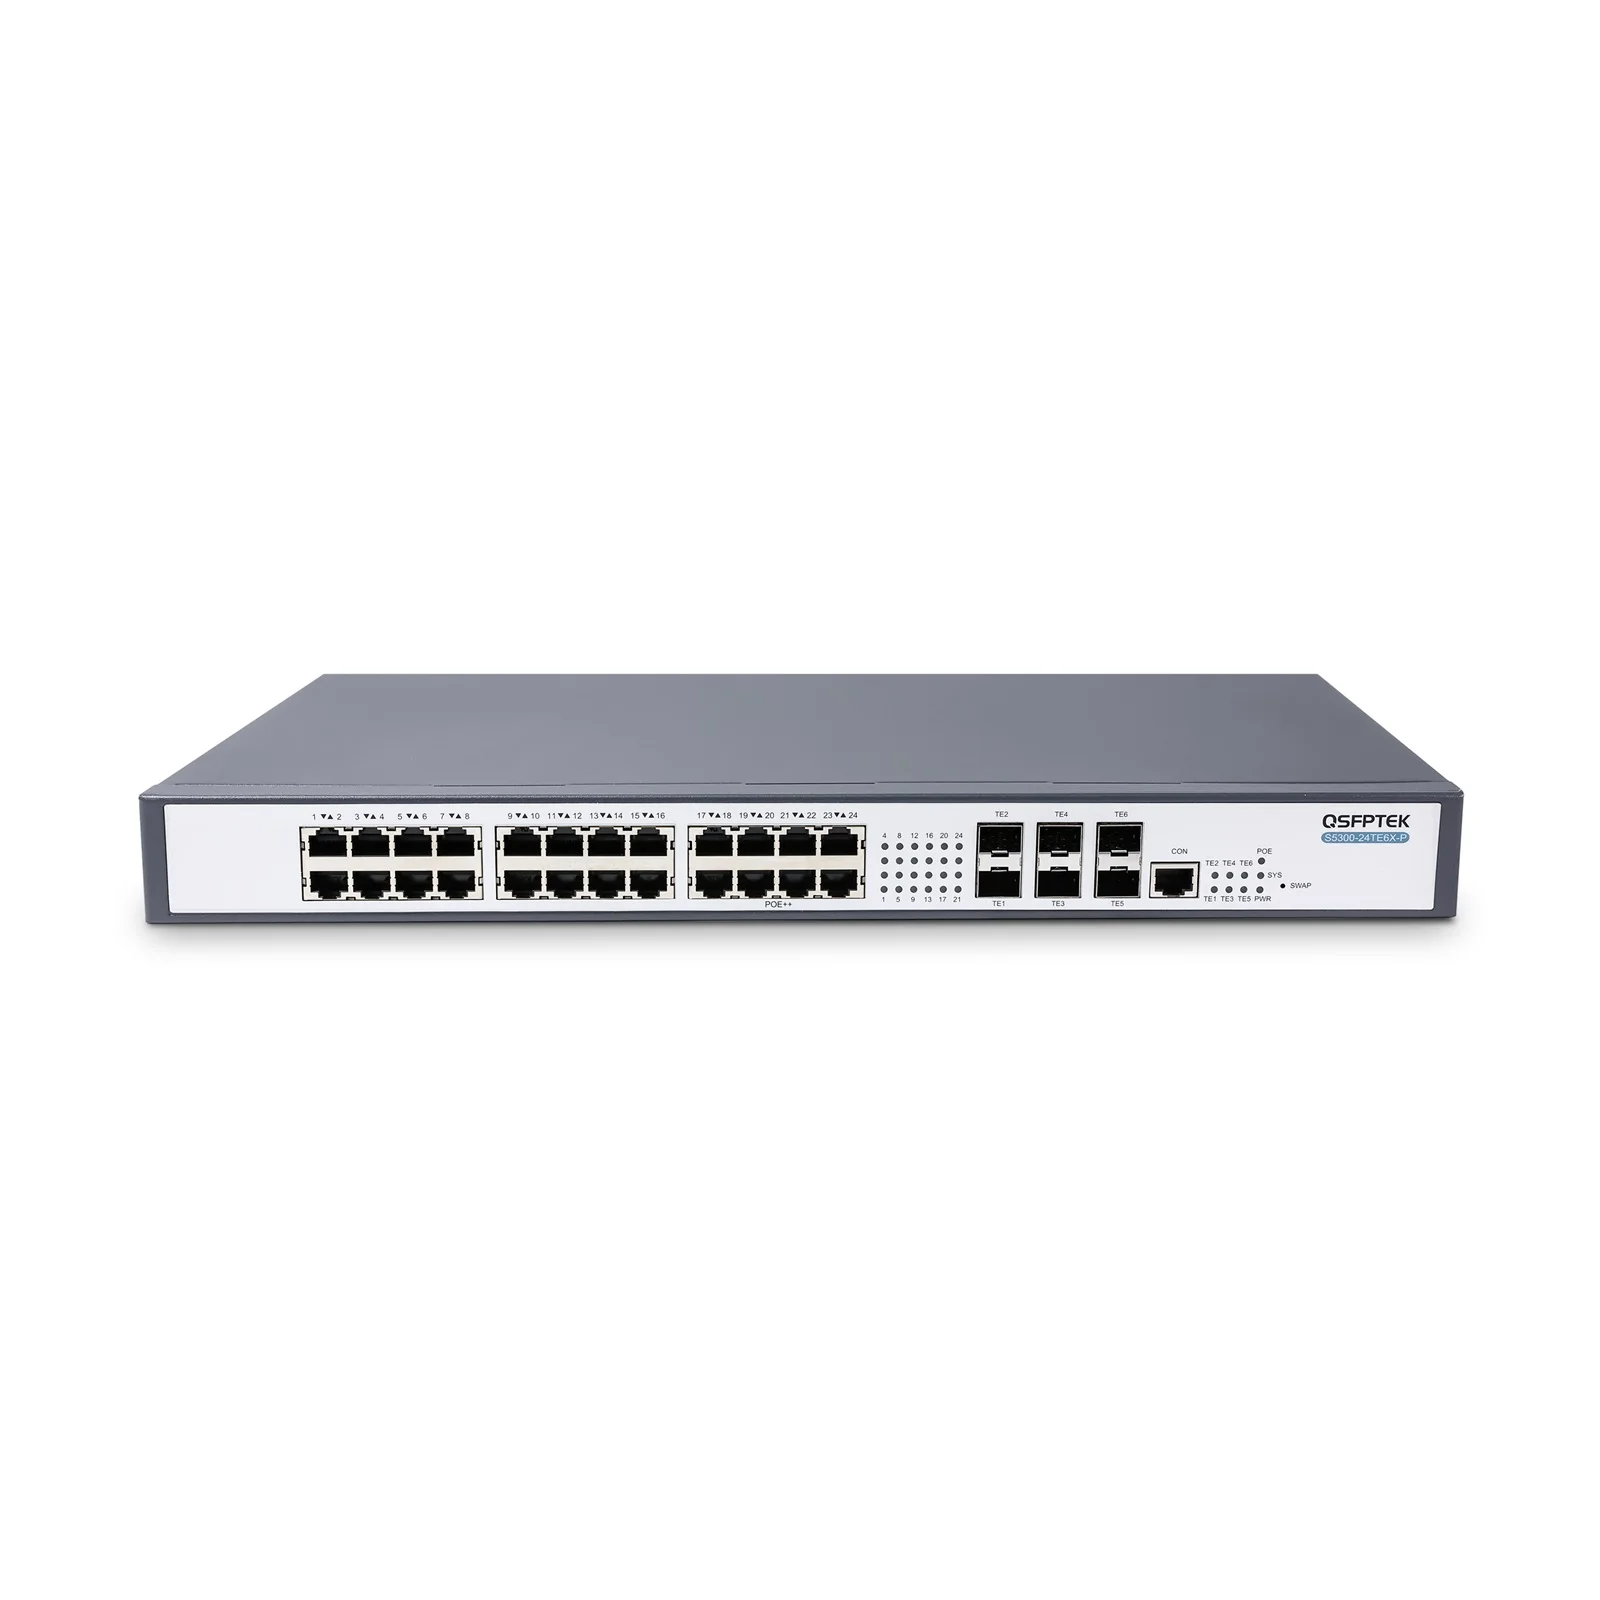 S5300-24TE6X-P, 24-Port Multi-Gigabit Managed Stackable Ethernet L3 2.5Gb  Switch, with 10G SFP+ Uplinks. - QSFPTEK